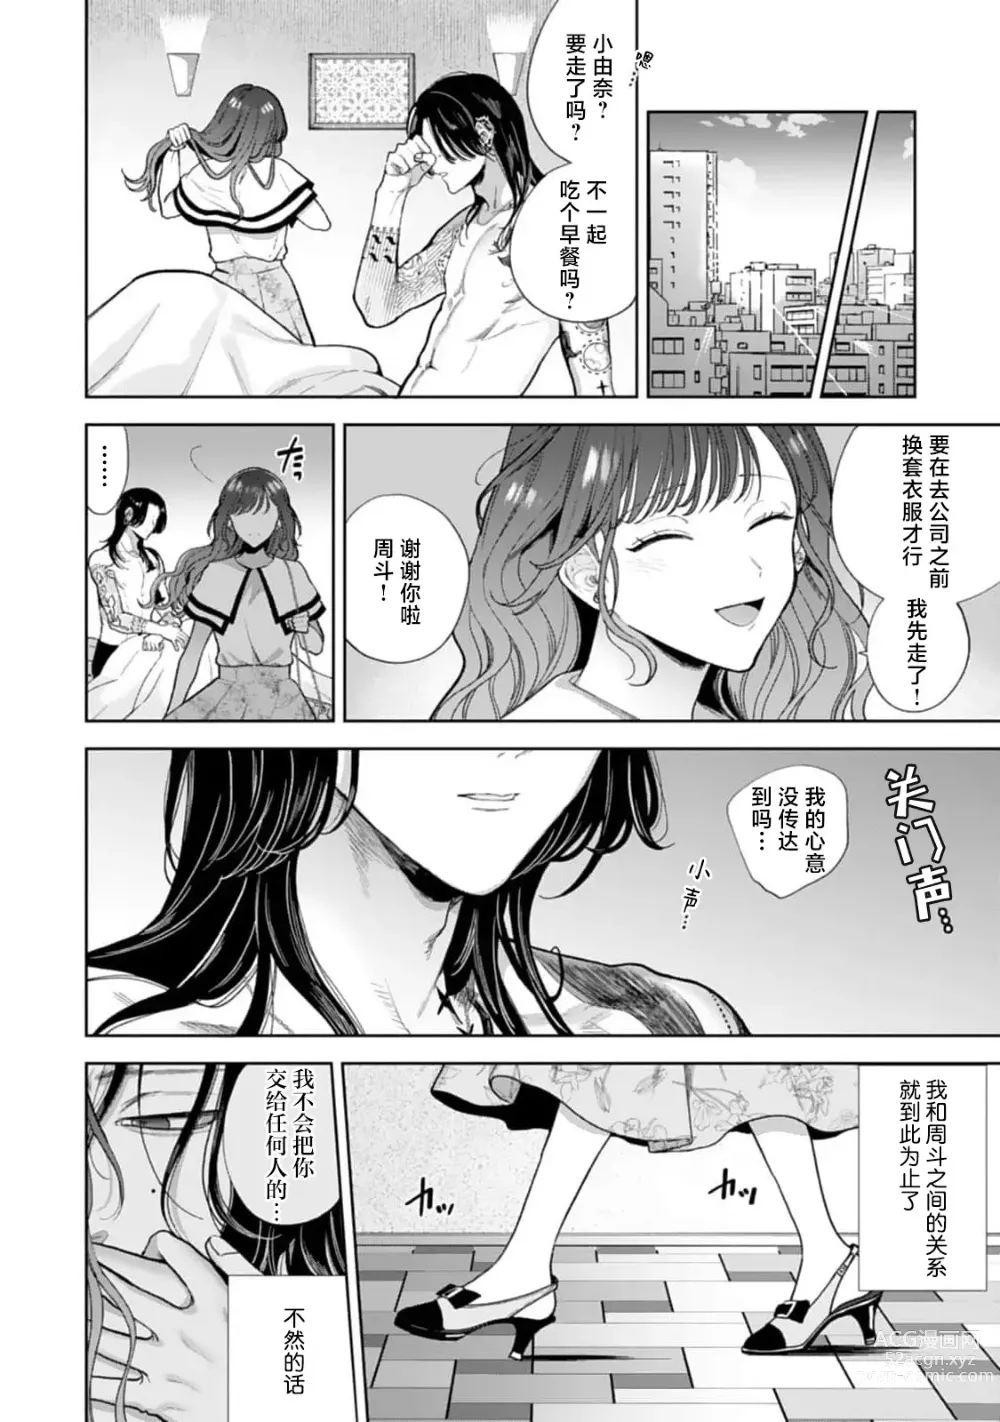 Page 13 of manga 执爱螺旋线